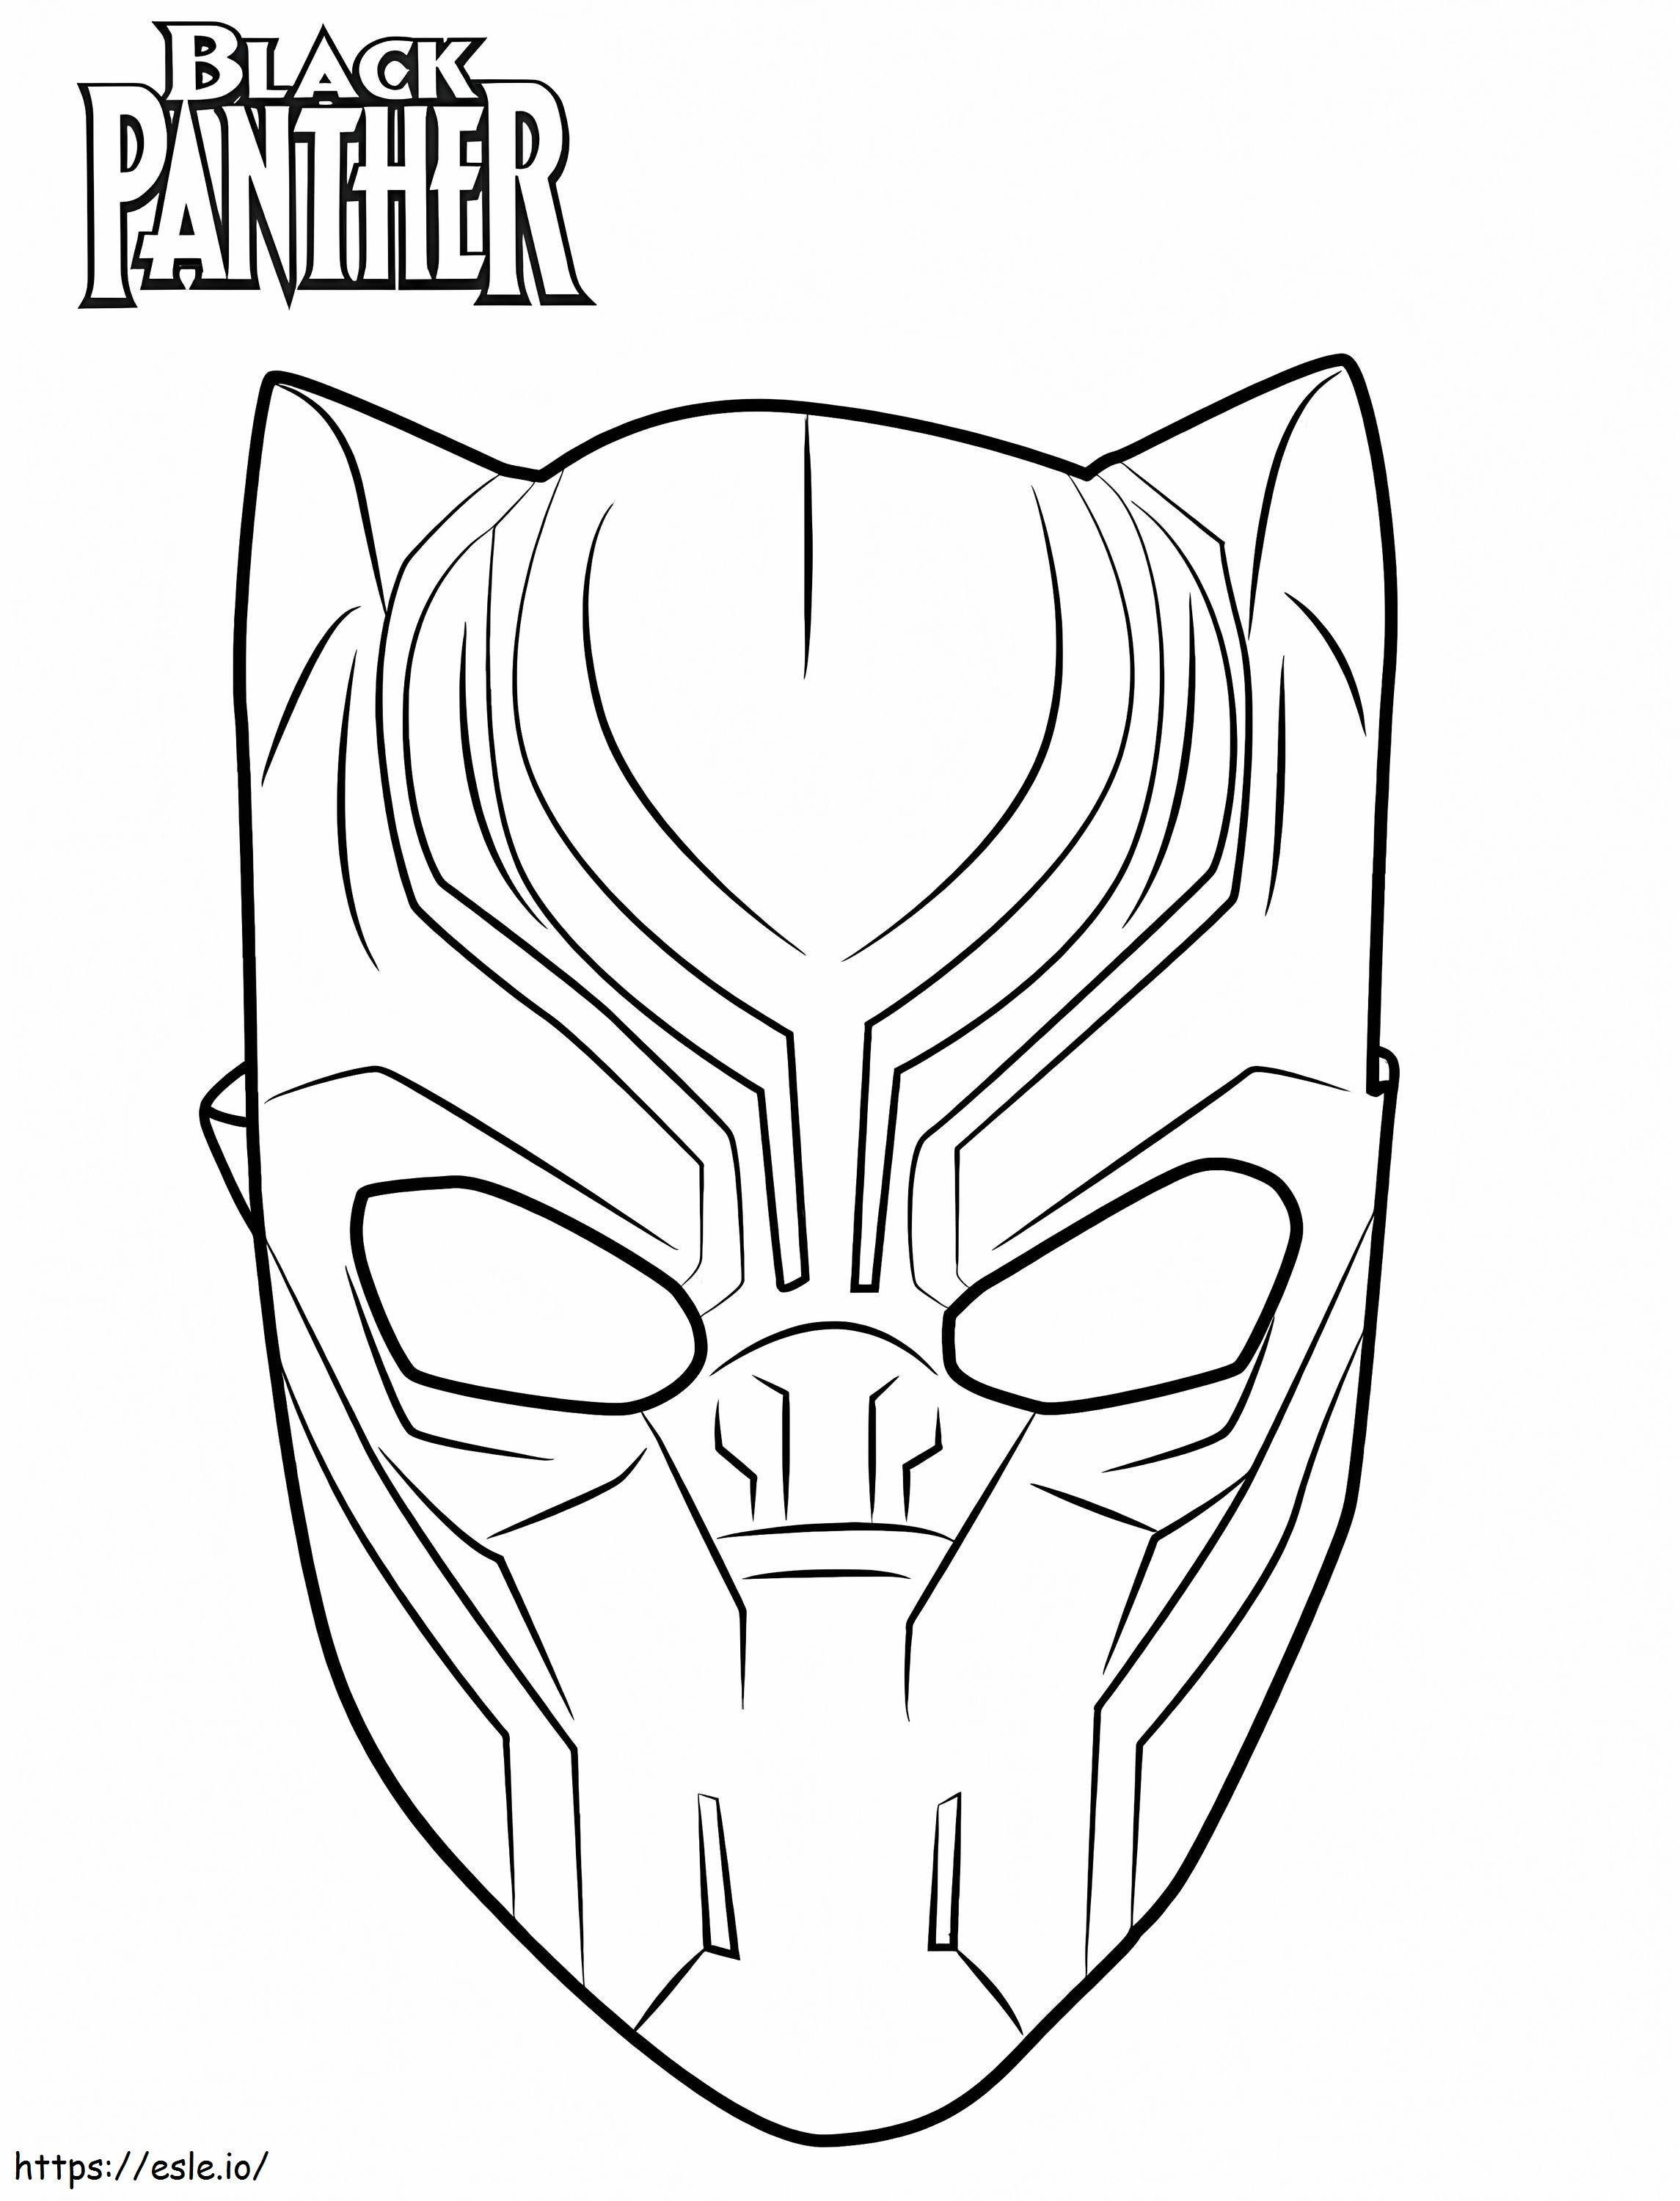 Black Panther-masker kleurplaat kleurplaat